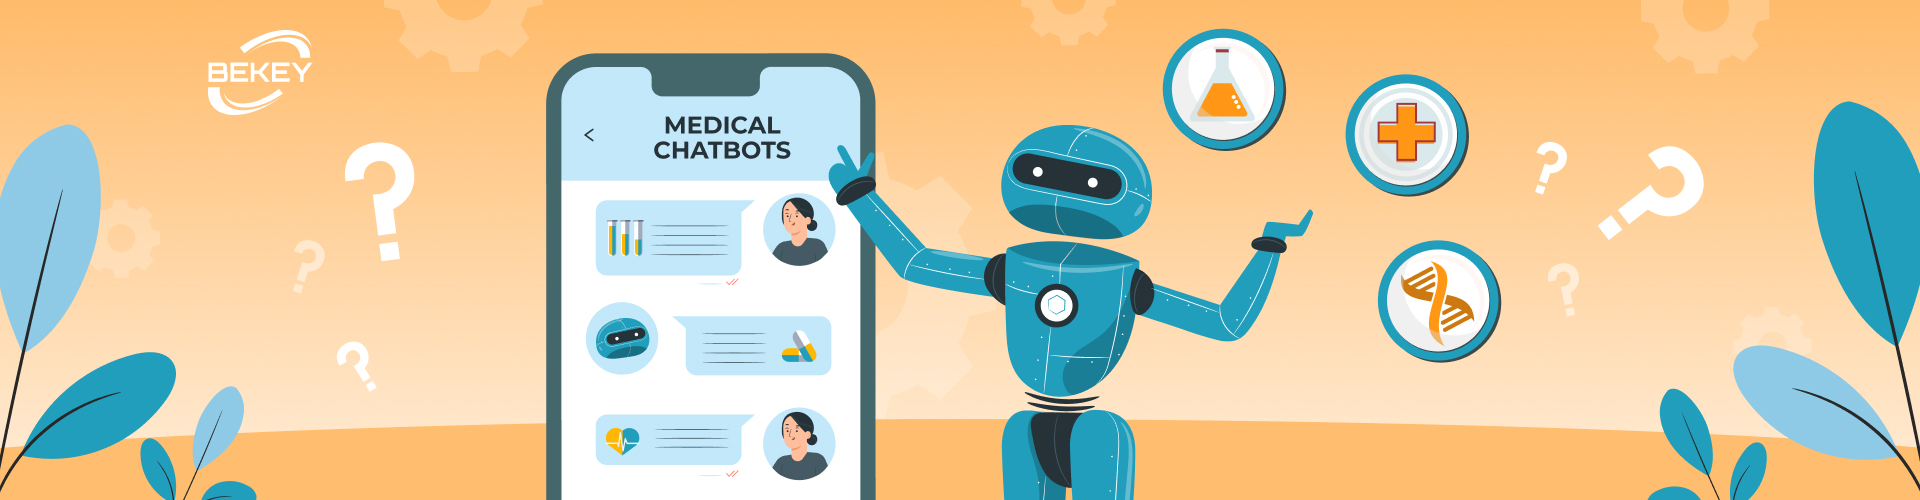 Medical Chatbots - image